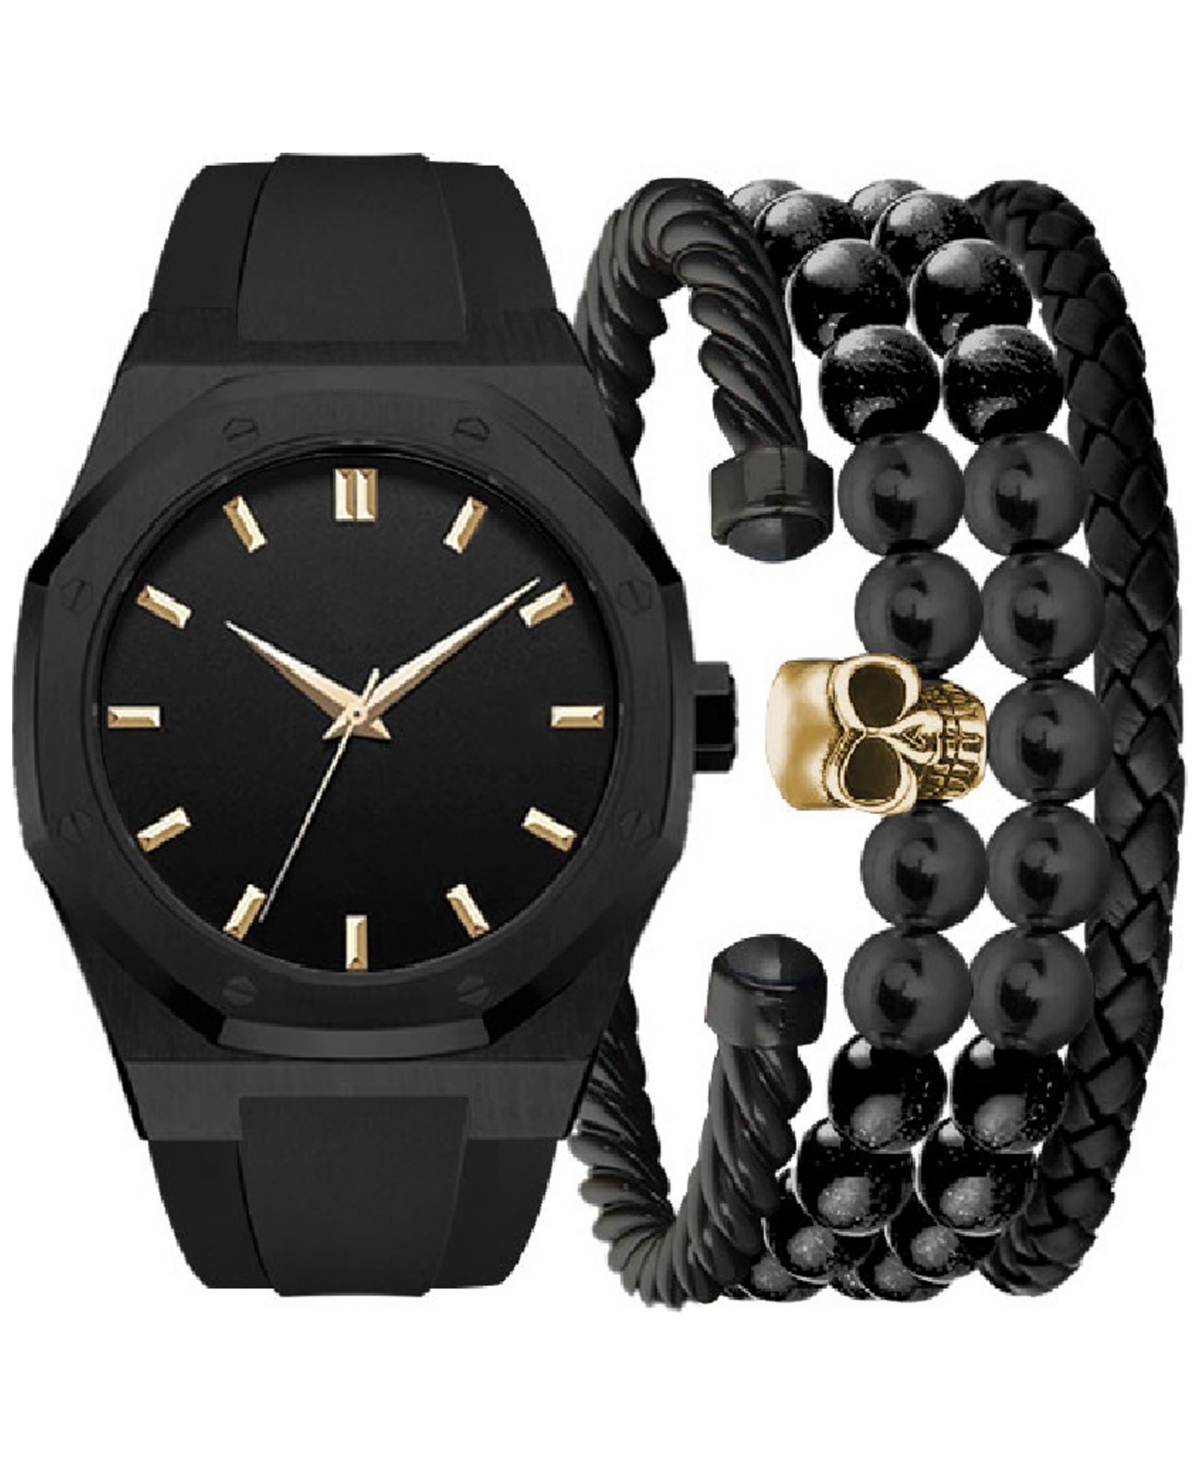 Men's Black Silicone Strap Watch 47mm Gift Set - Black